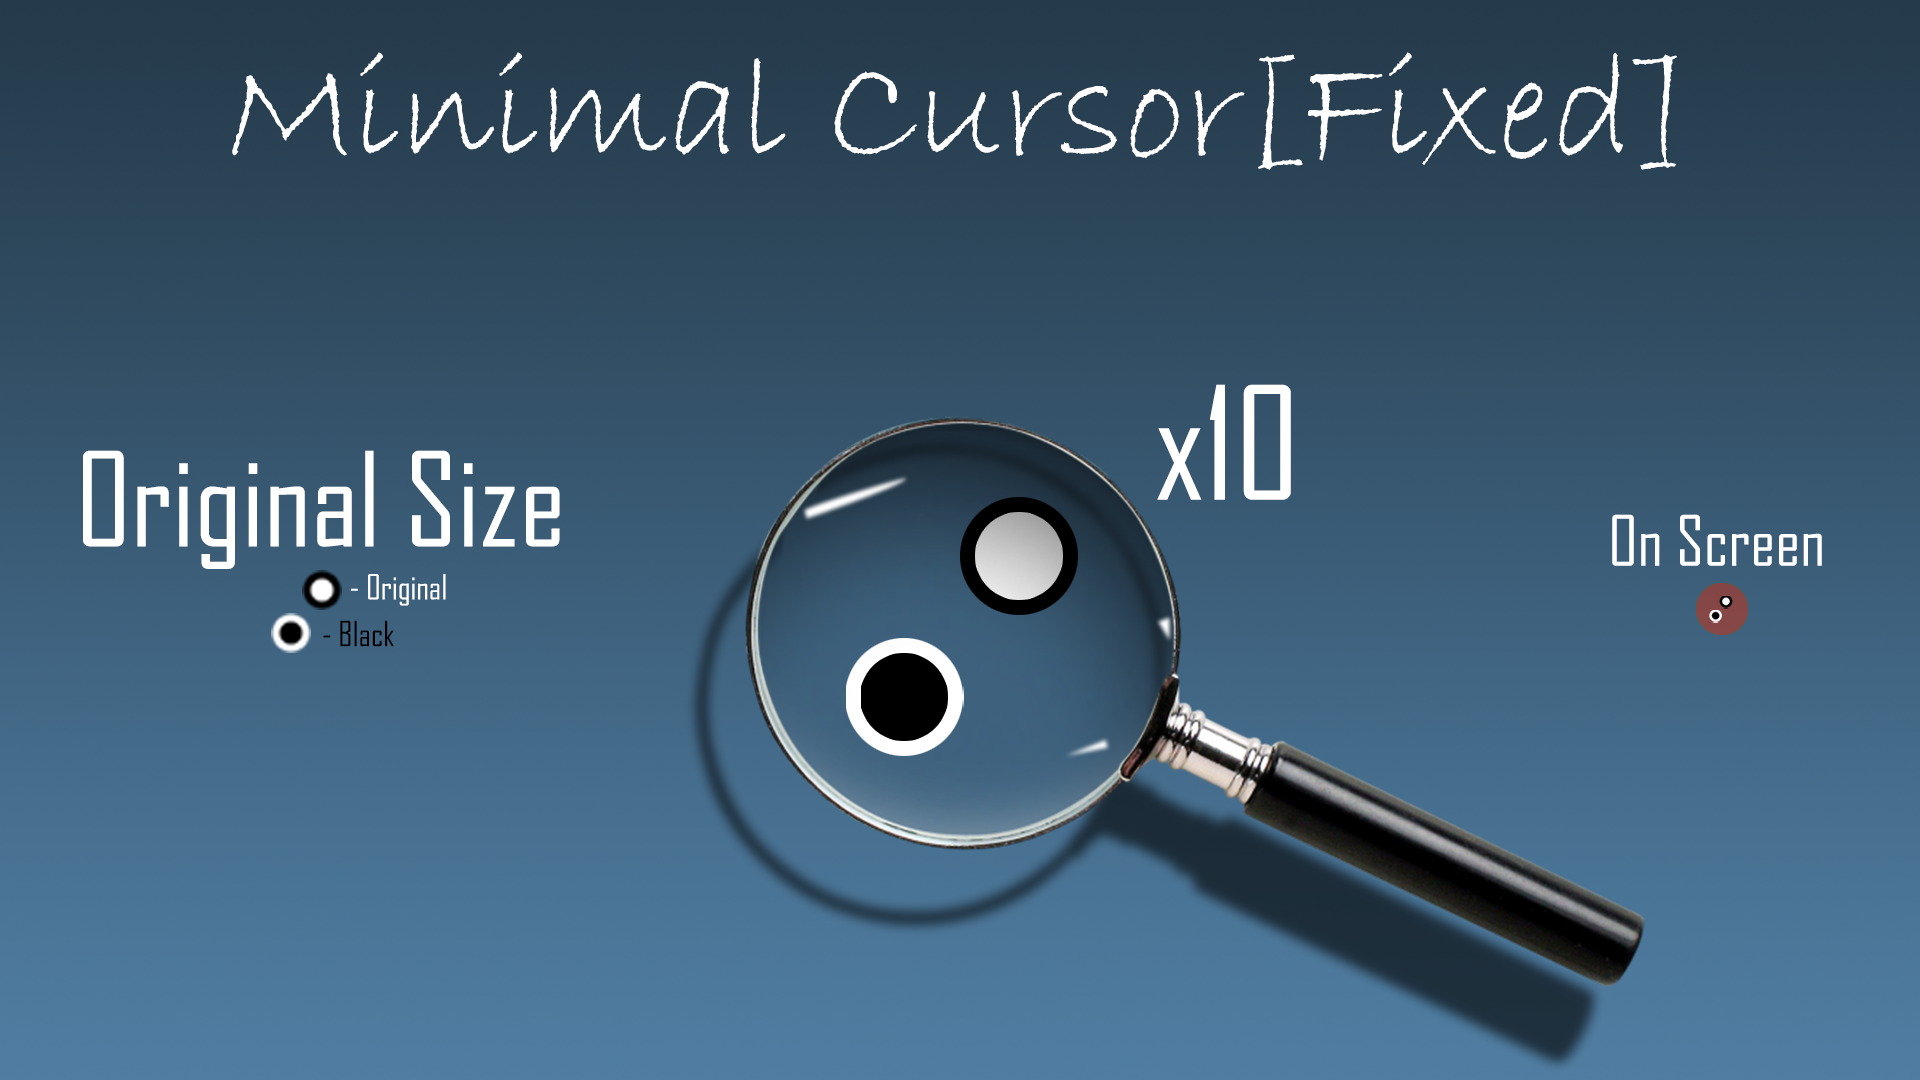 Minimal Cursor [Fixed]